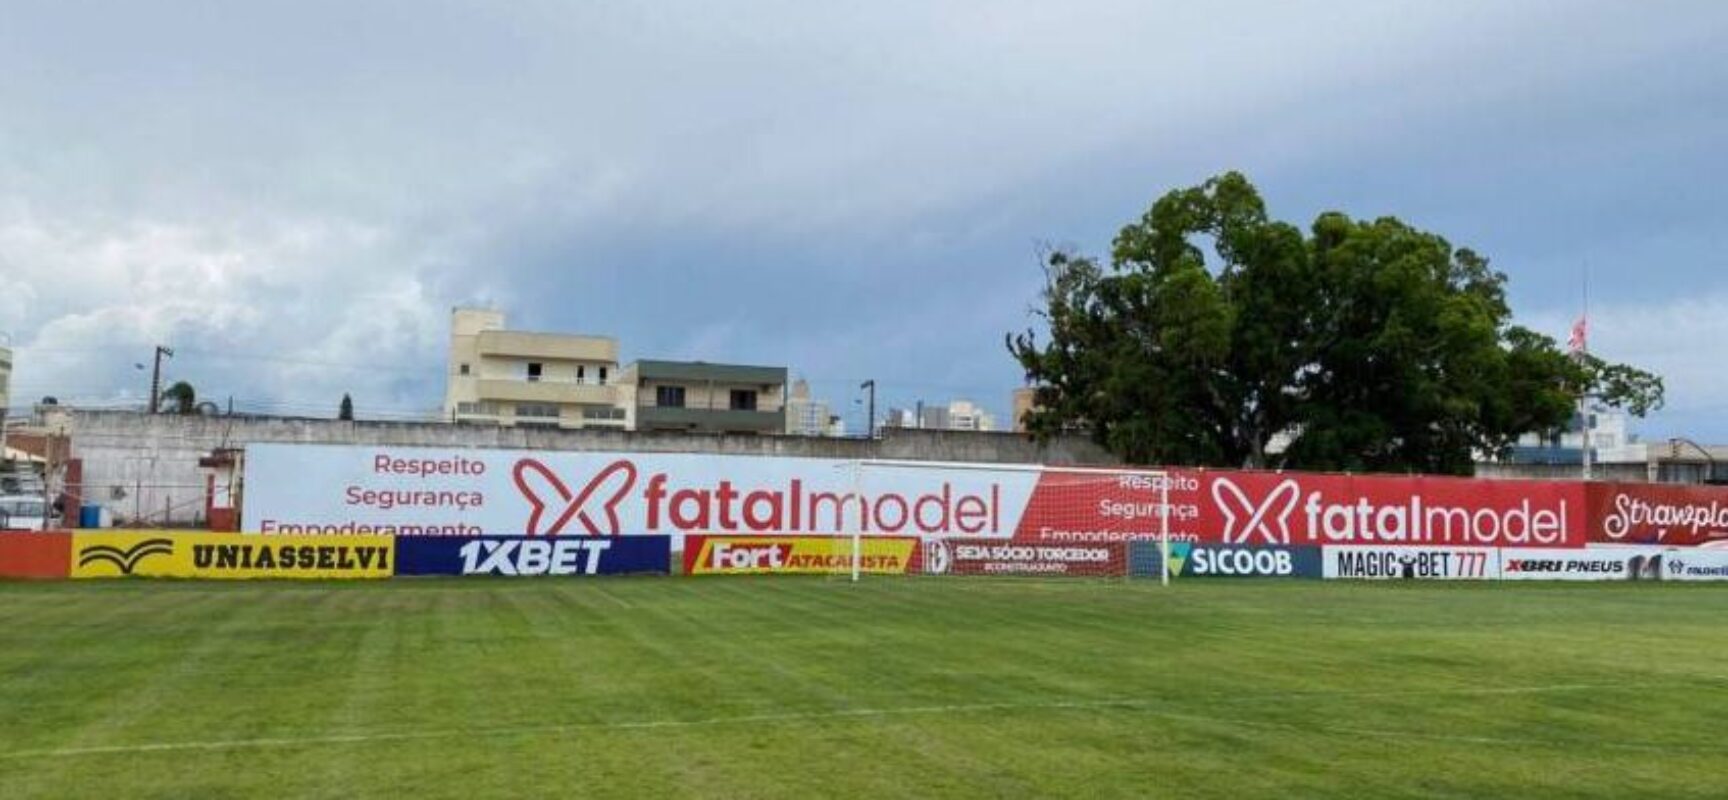 Fatal Model patrocina Campeonato Baiano de Futebol